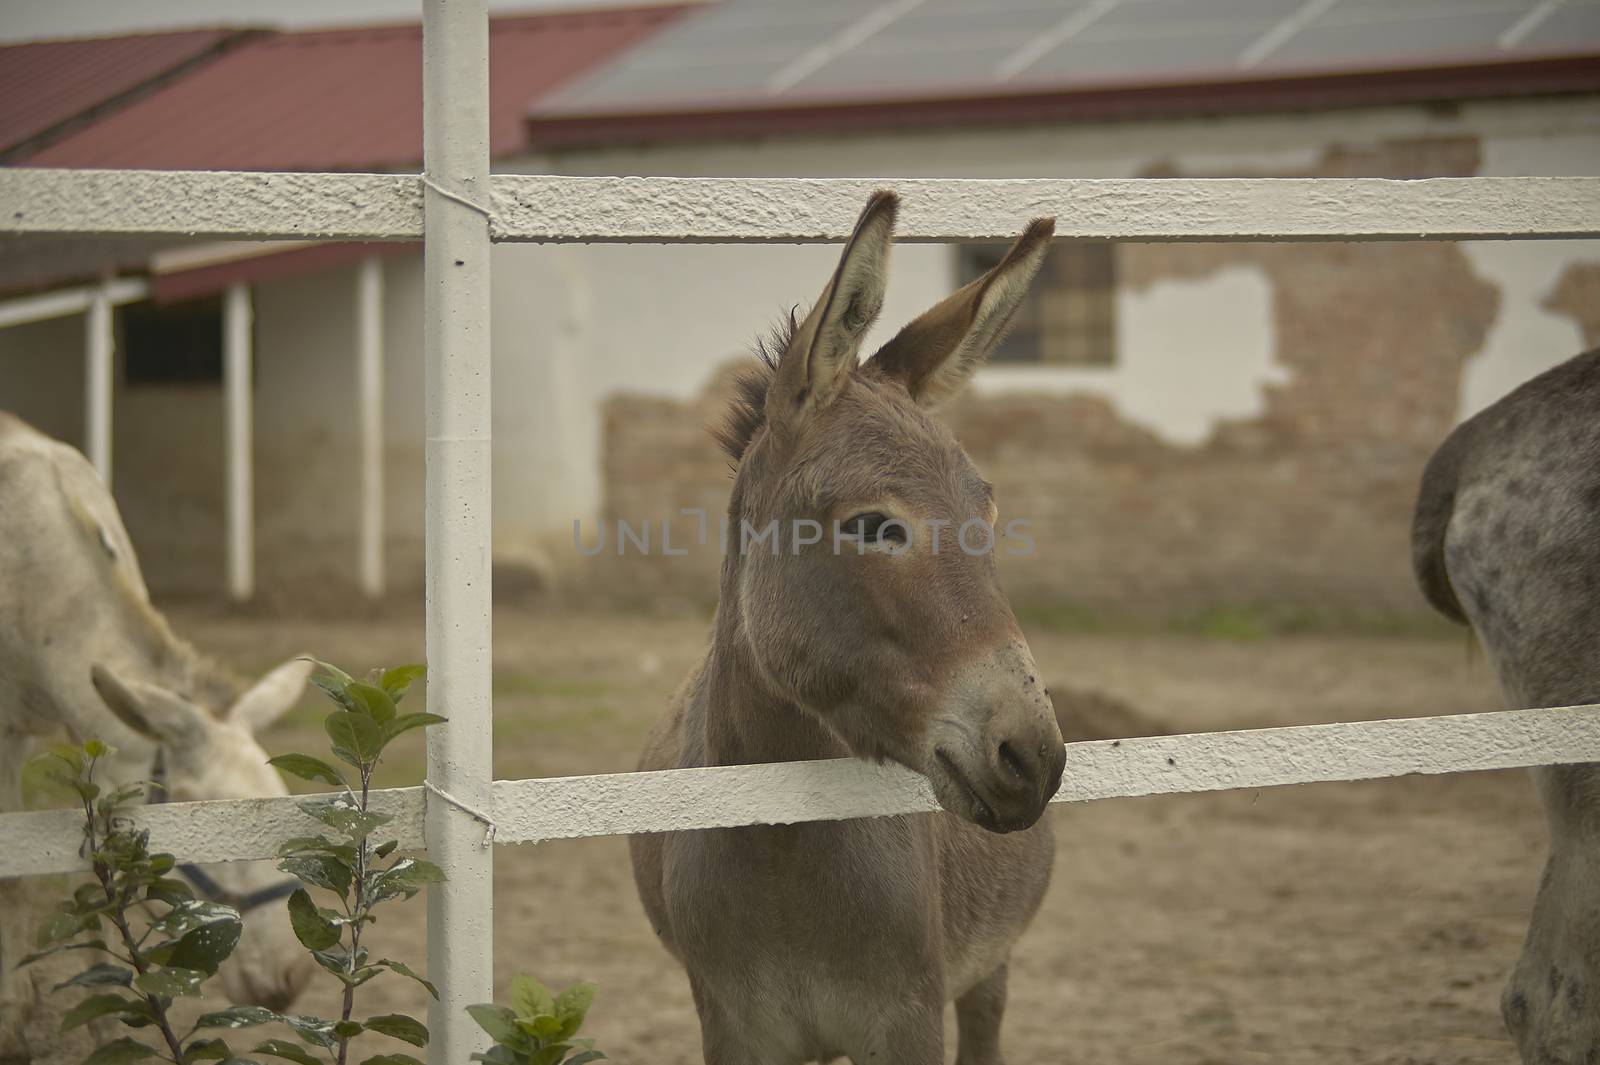 donkey in the pen by pippocarlot